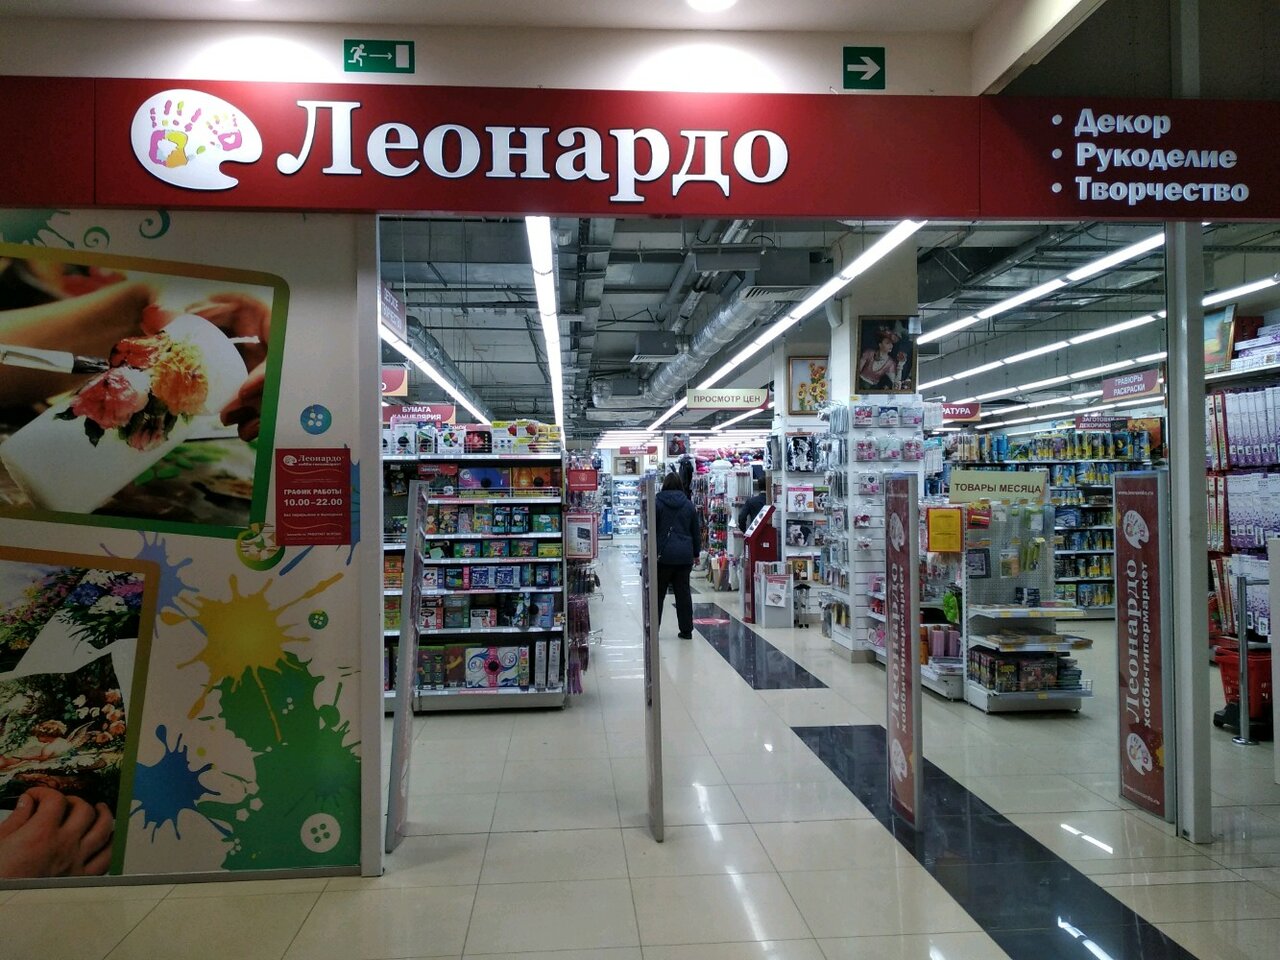 Леонардо интернет магазин для творчества москва каталог товаров с ценами